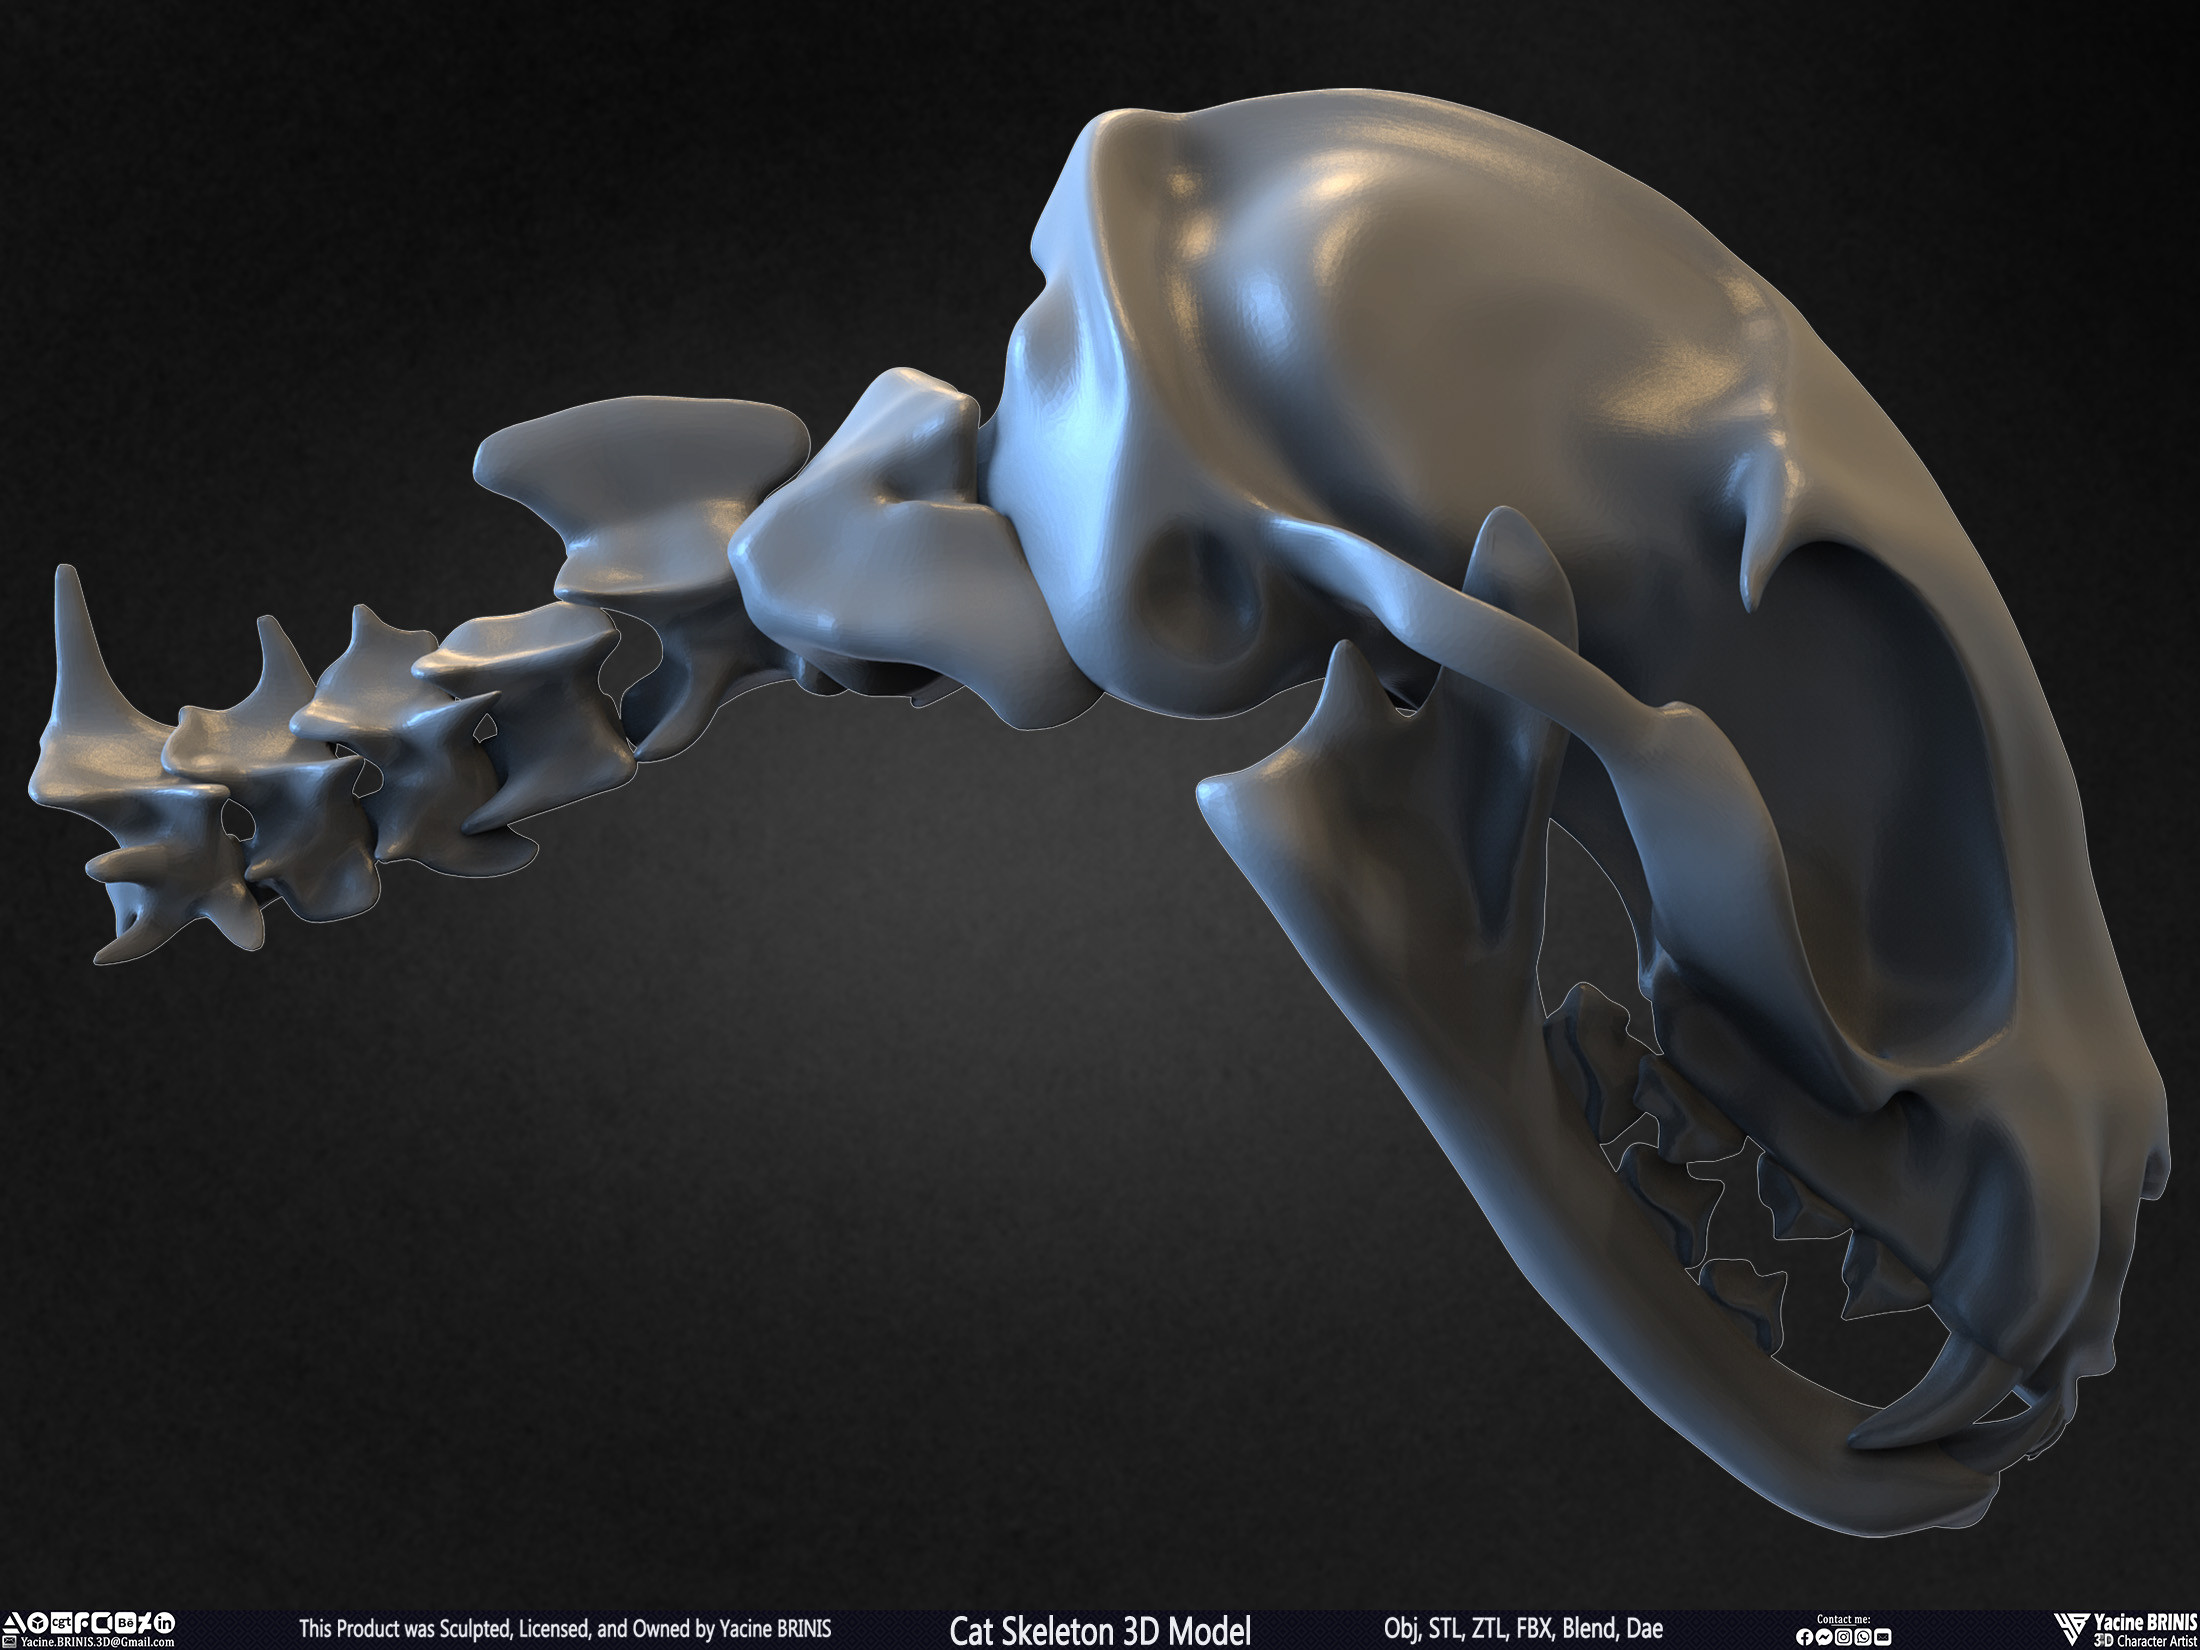 Highly Detailed Cat Skeleton 3D Model Sculpted by Yacine BRINIS Set 029